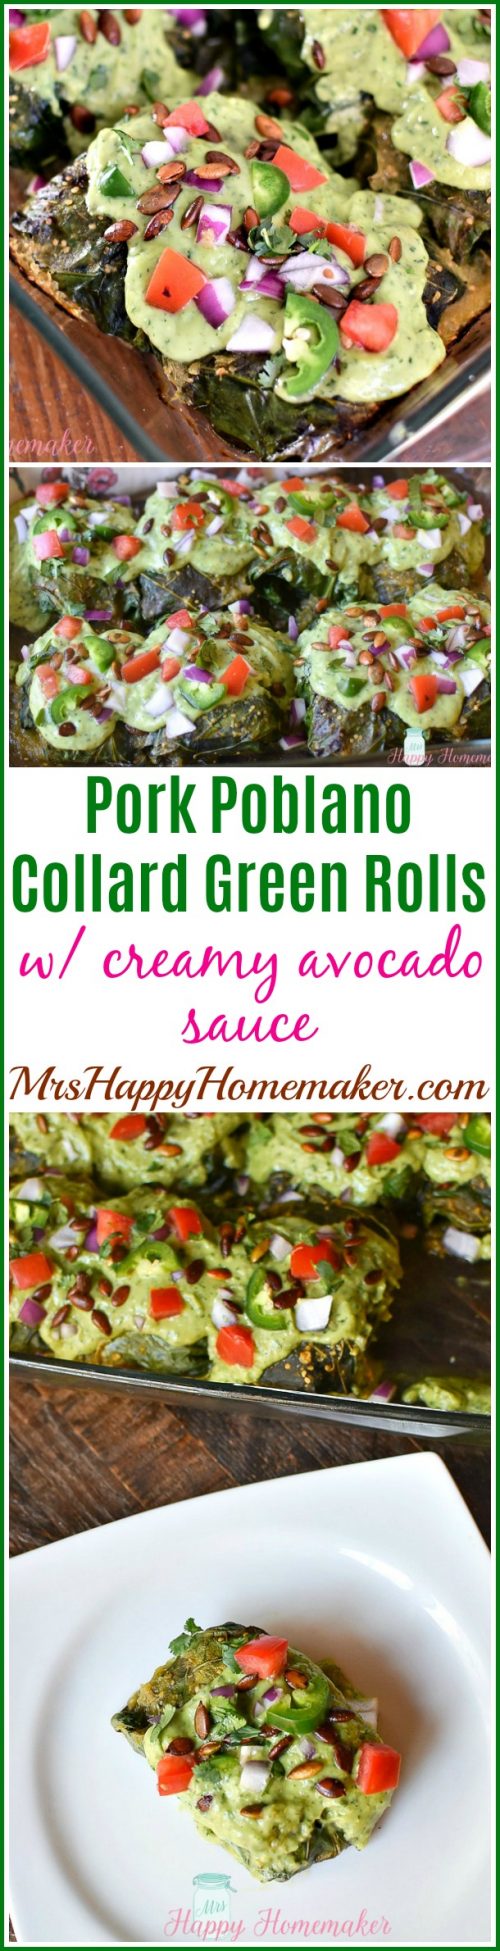 Pork Poblano Collard Green Rolls with Creamy Avocado Sauce - Whole30/Paleo Enchiladas \